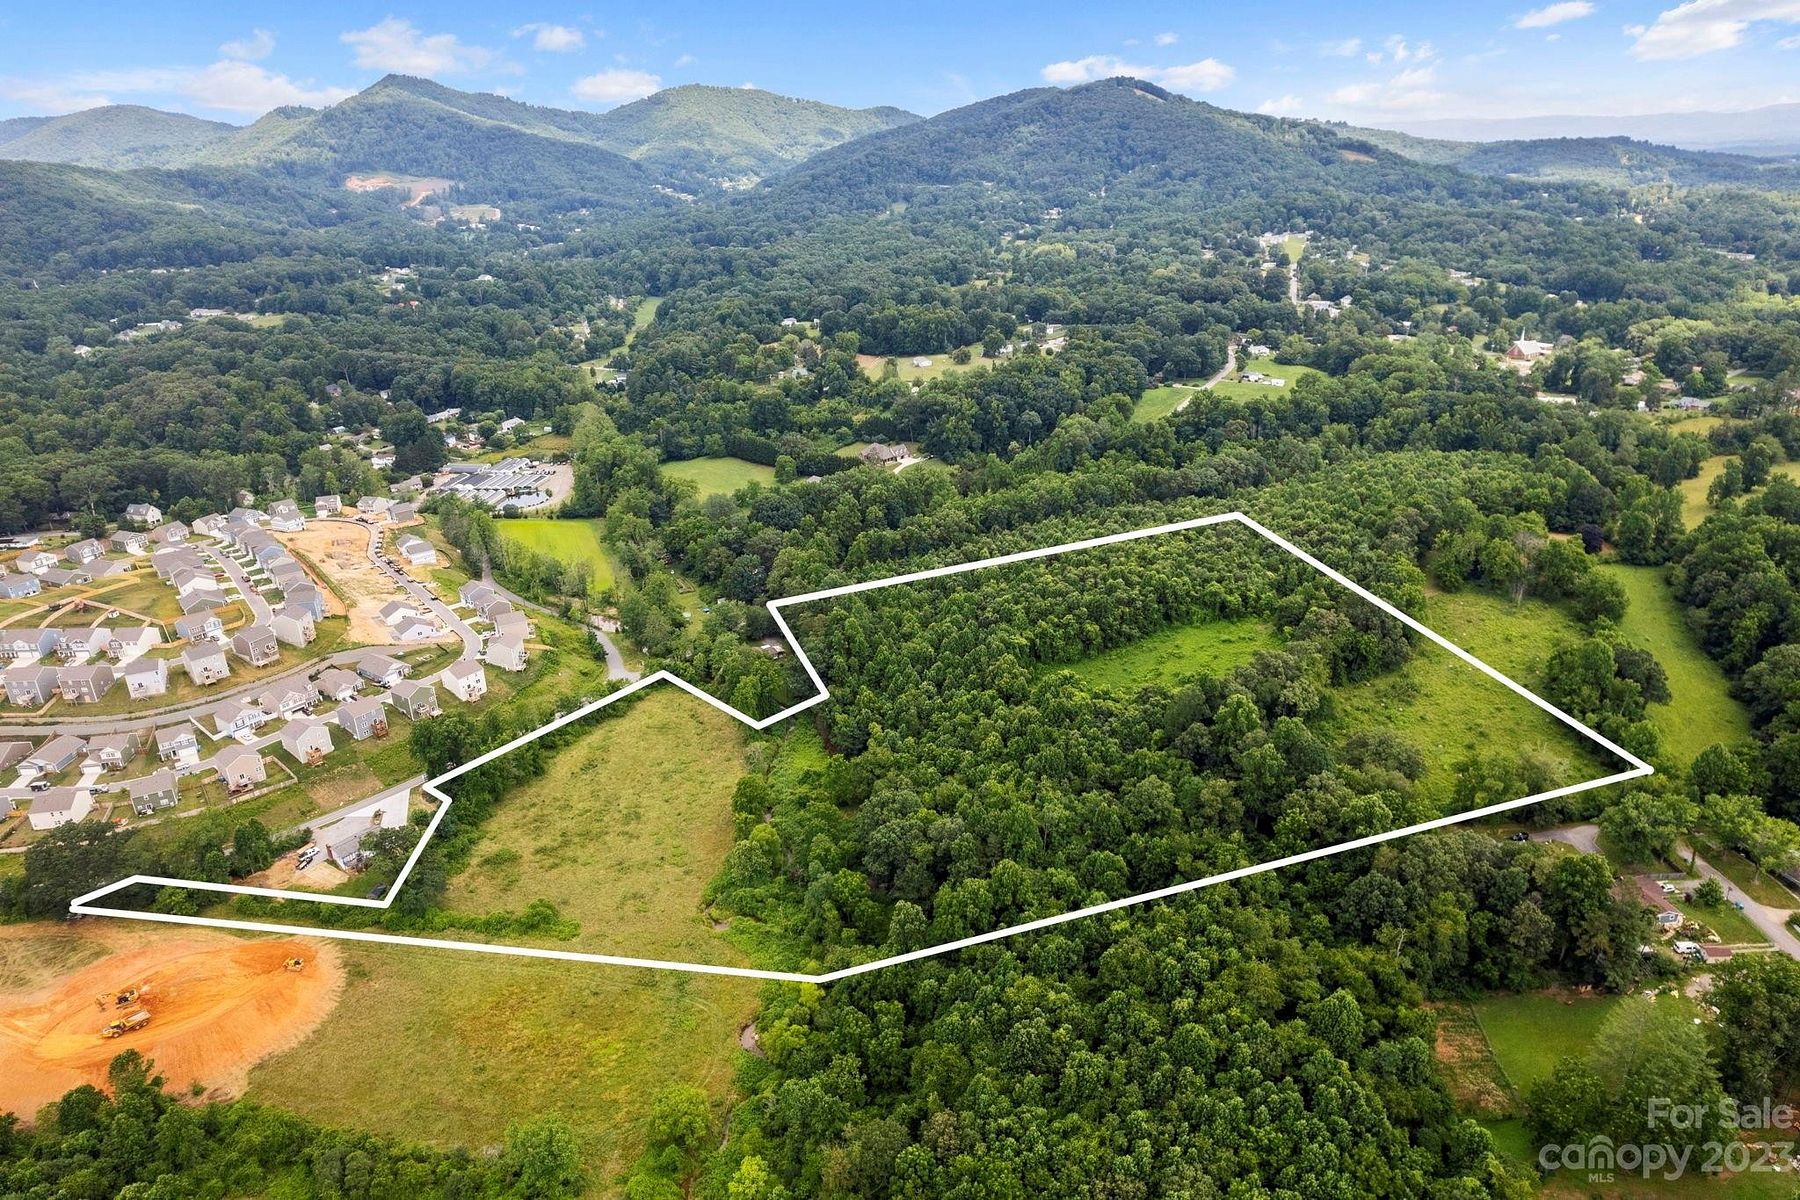 17 Acres of Land for Sale in Asheville, North Carolina